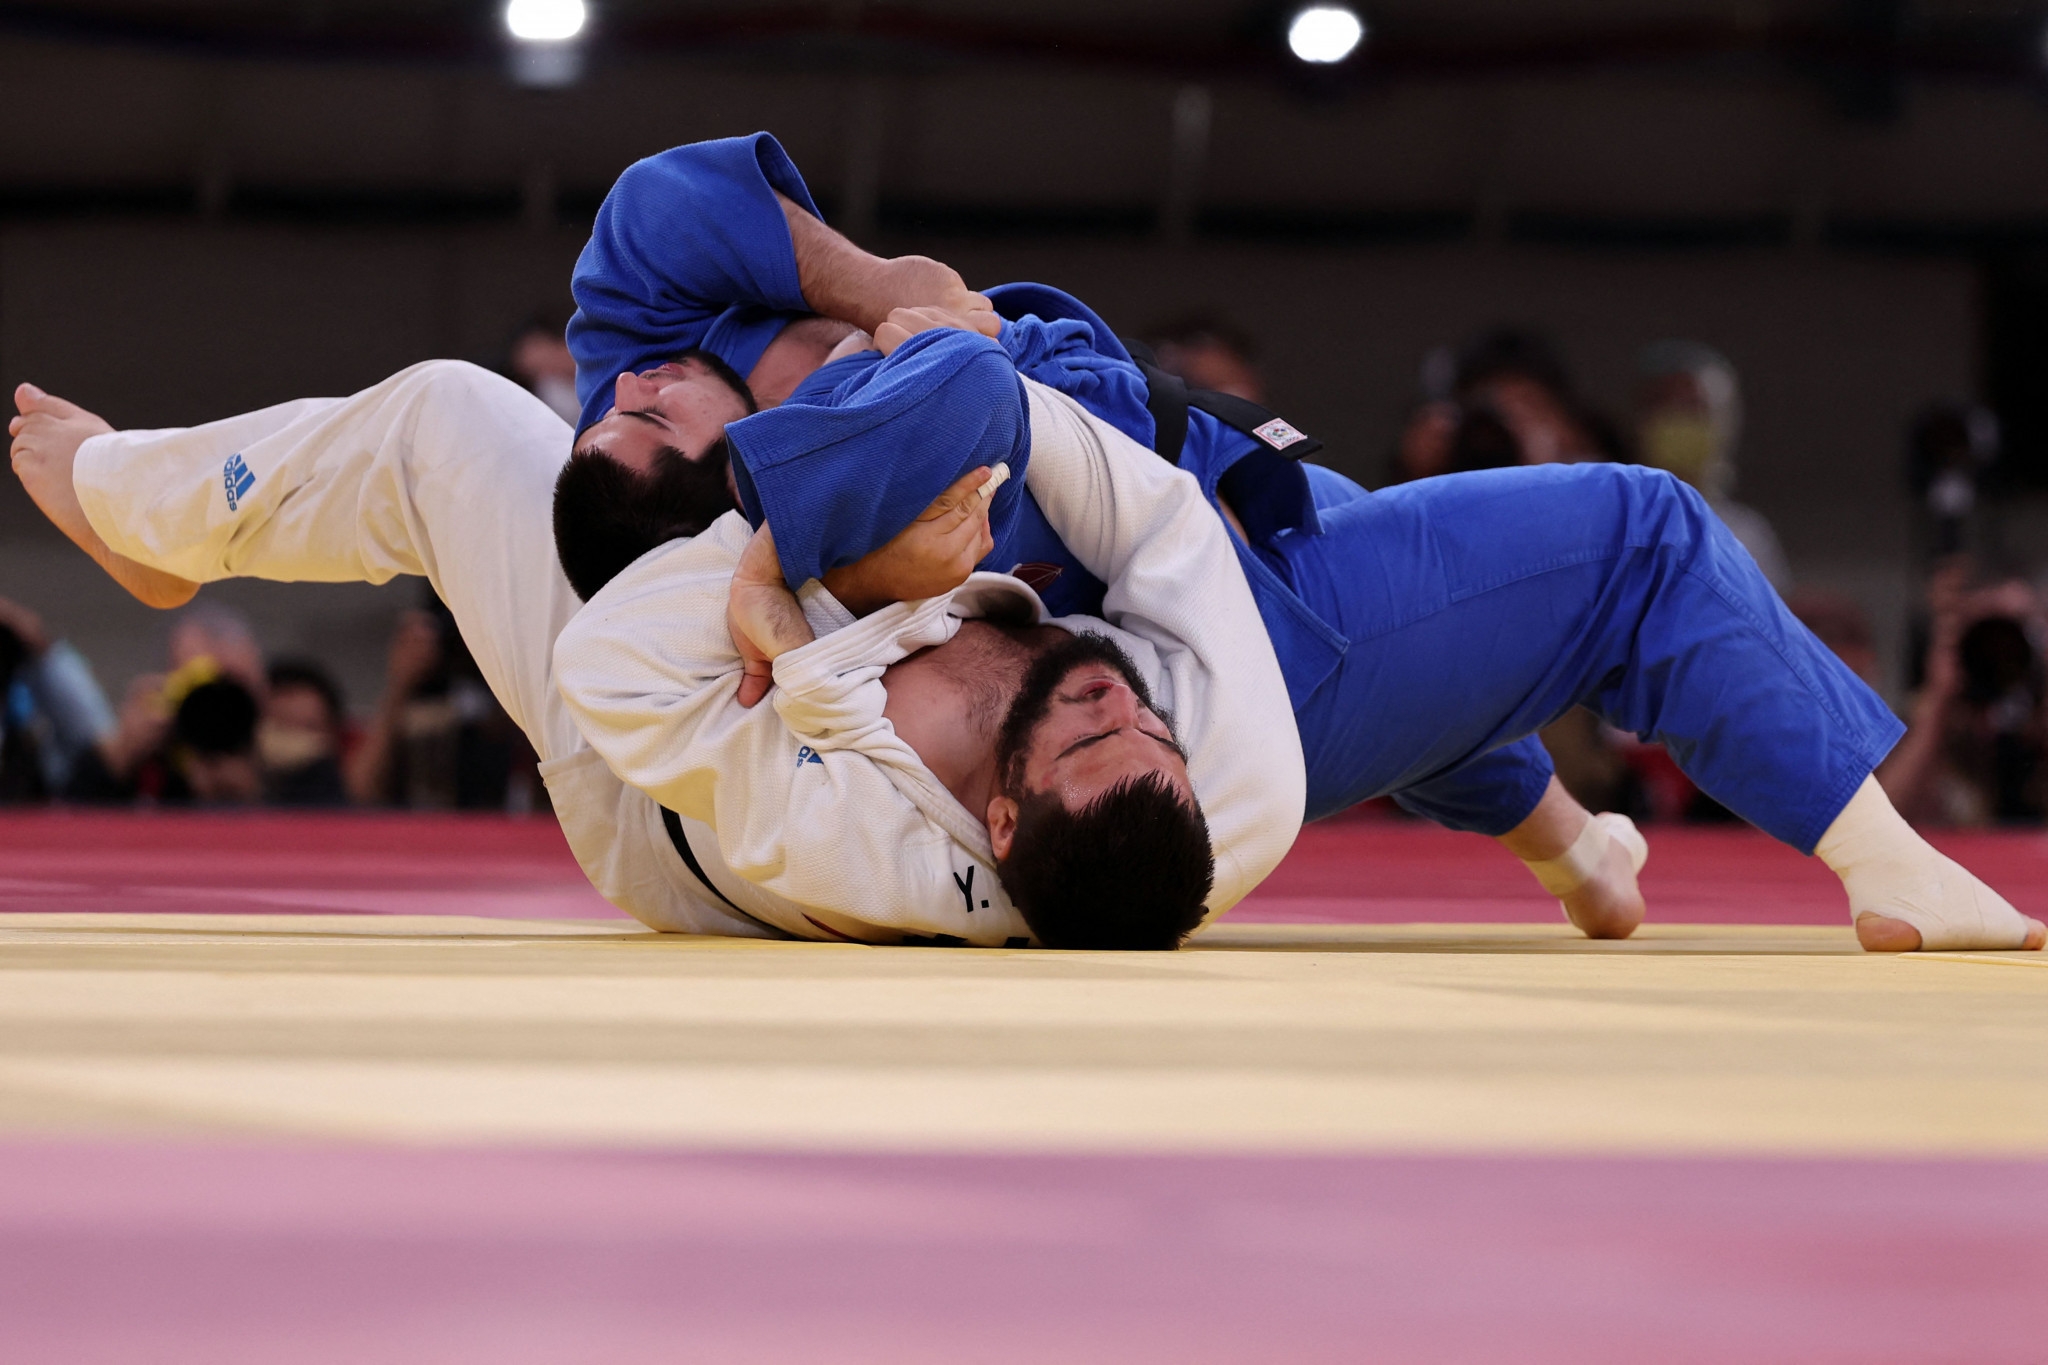 Russian judoka poised to compete at Ulanbataar Grand Slam as neutrals